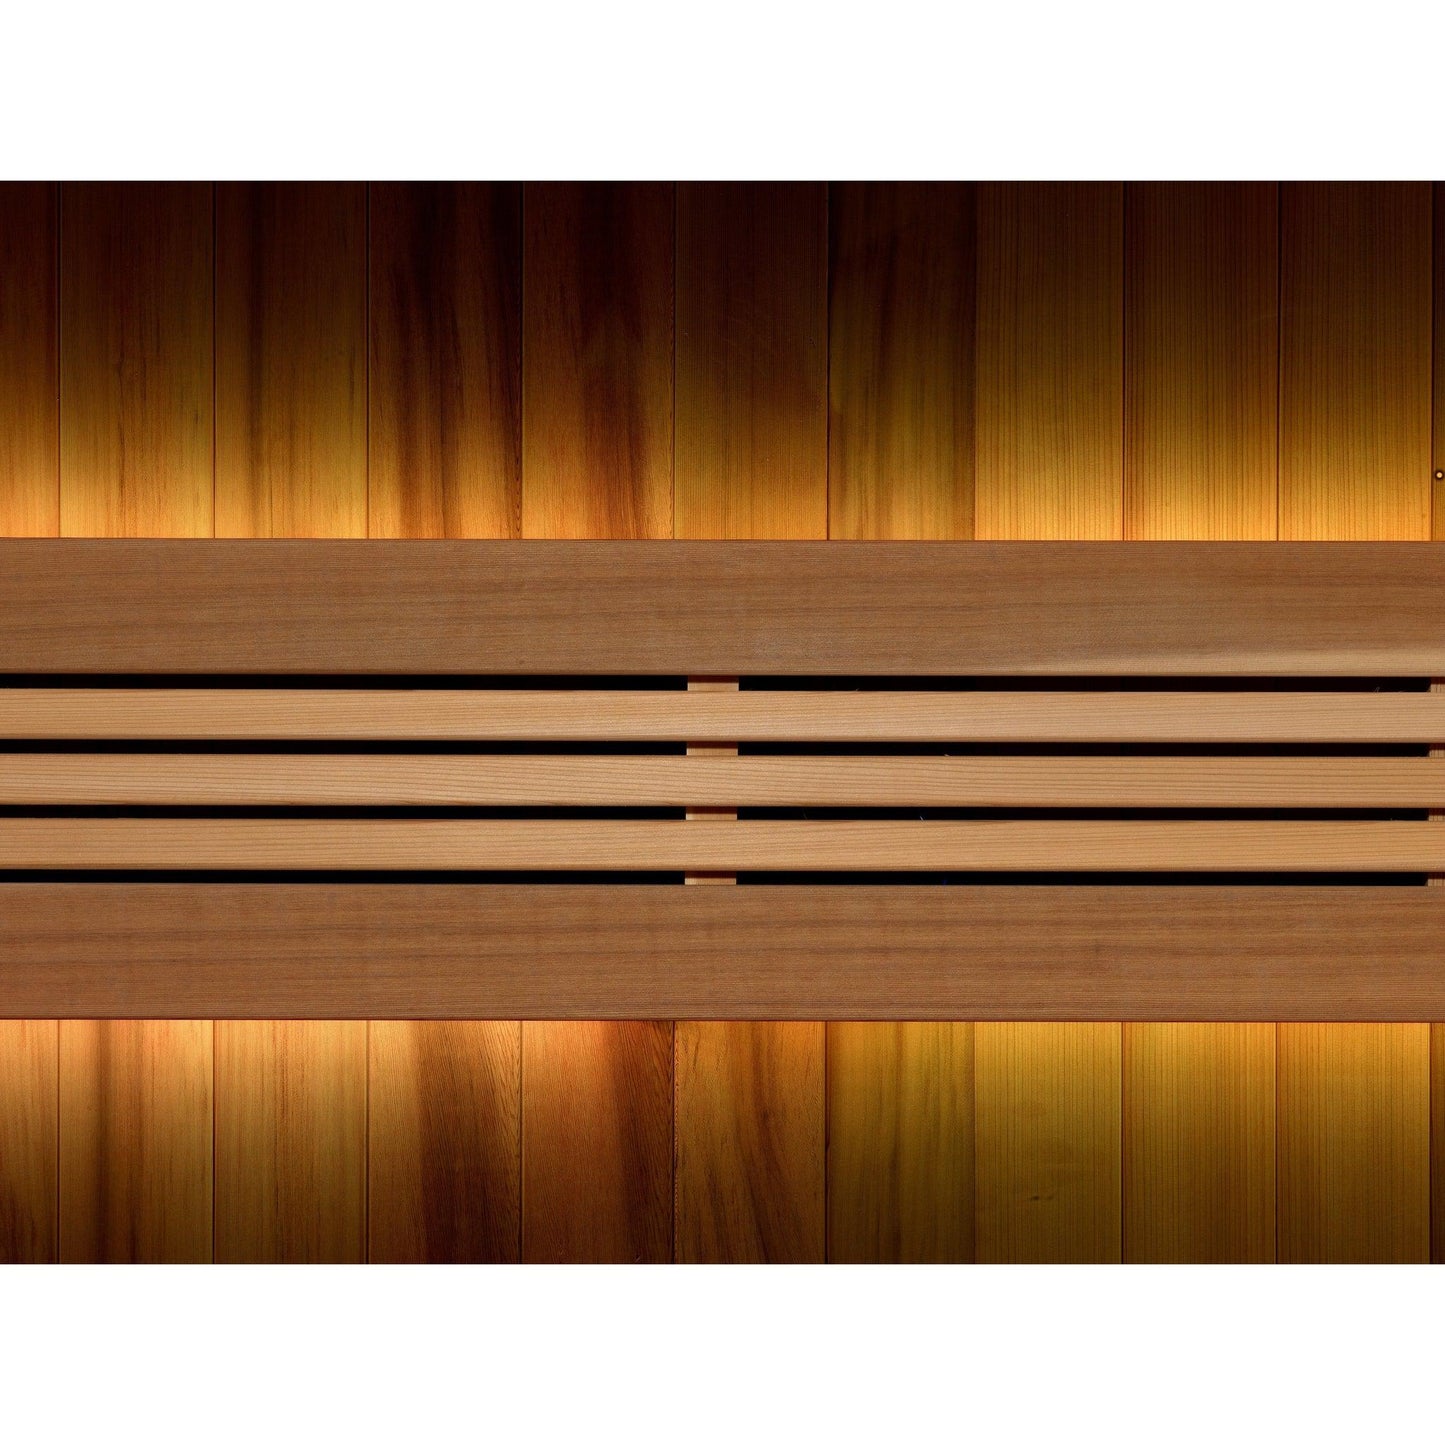 Golden Designs Osla Edition 4-6-Person Traditional Steam Sauna in Canadian Red Cedar